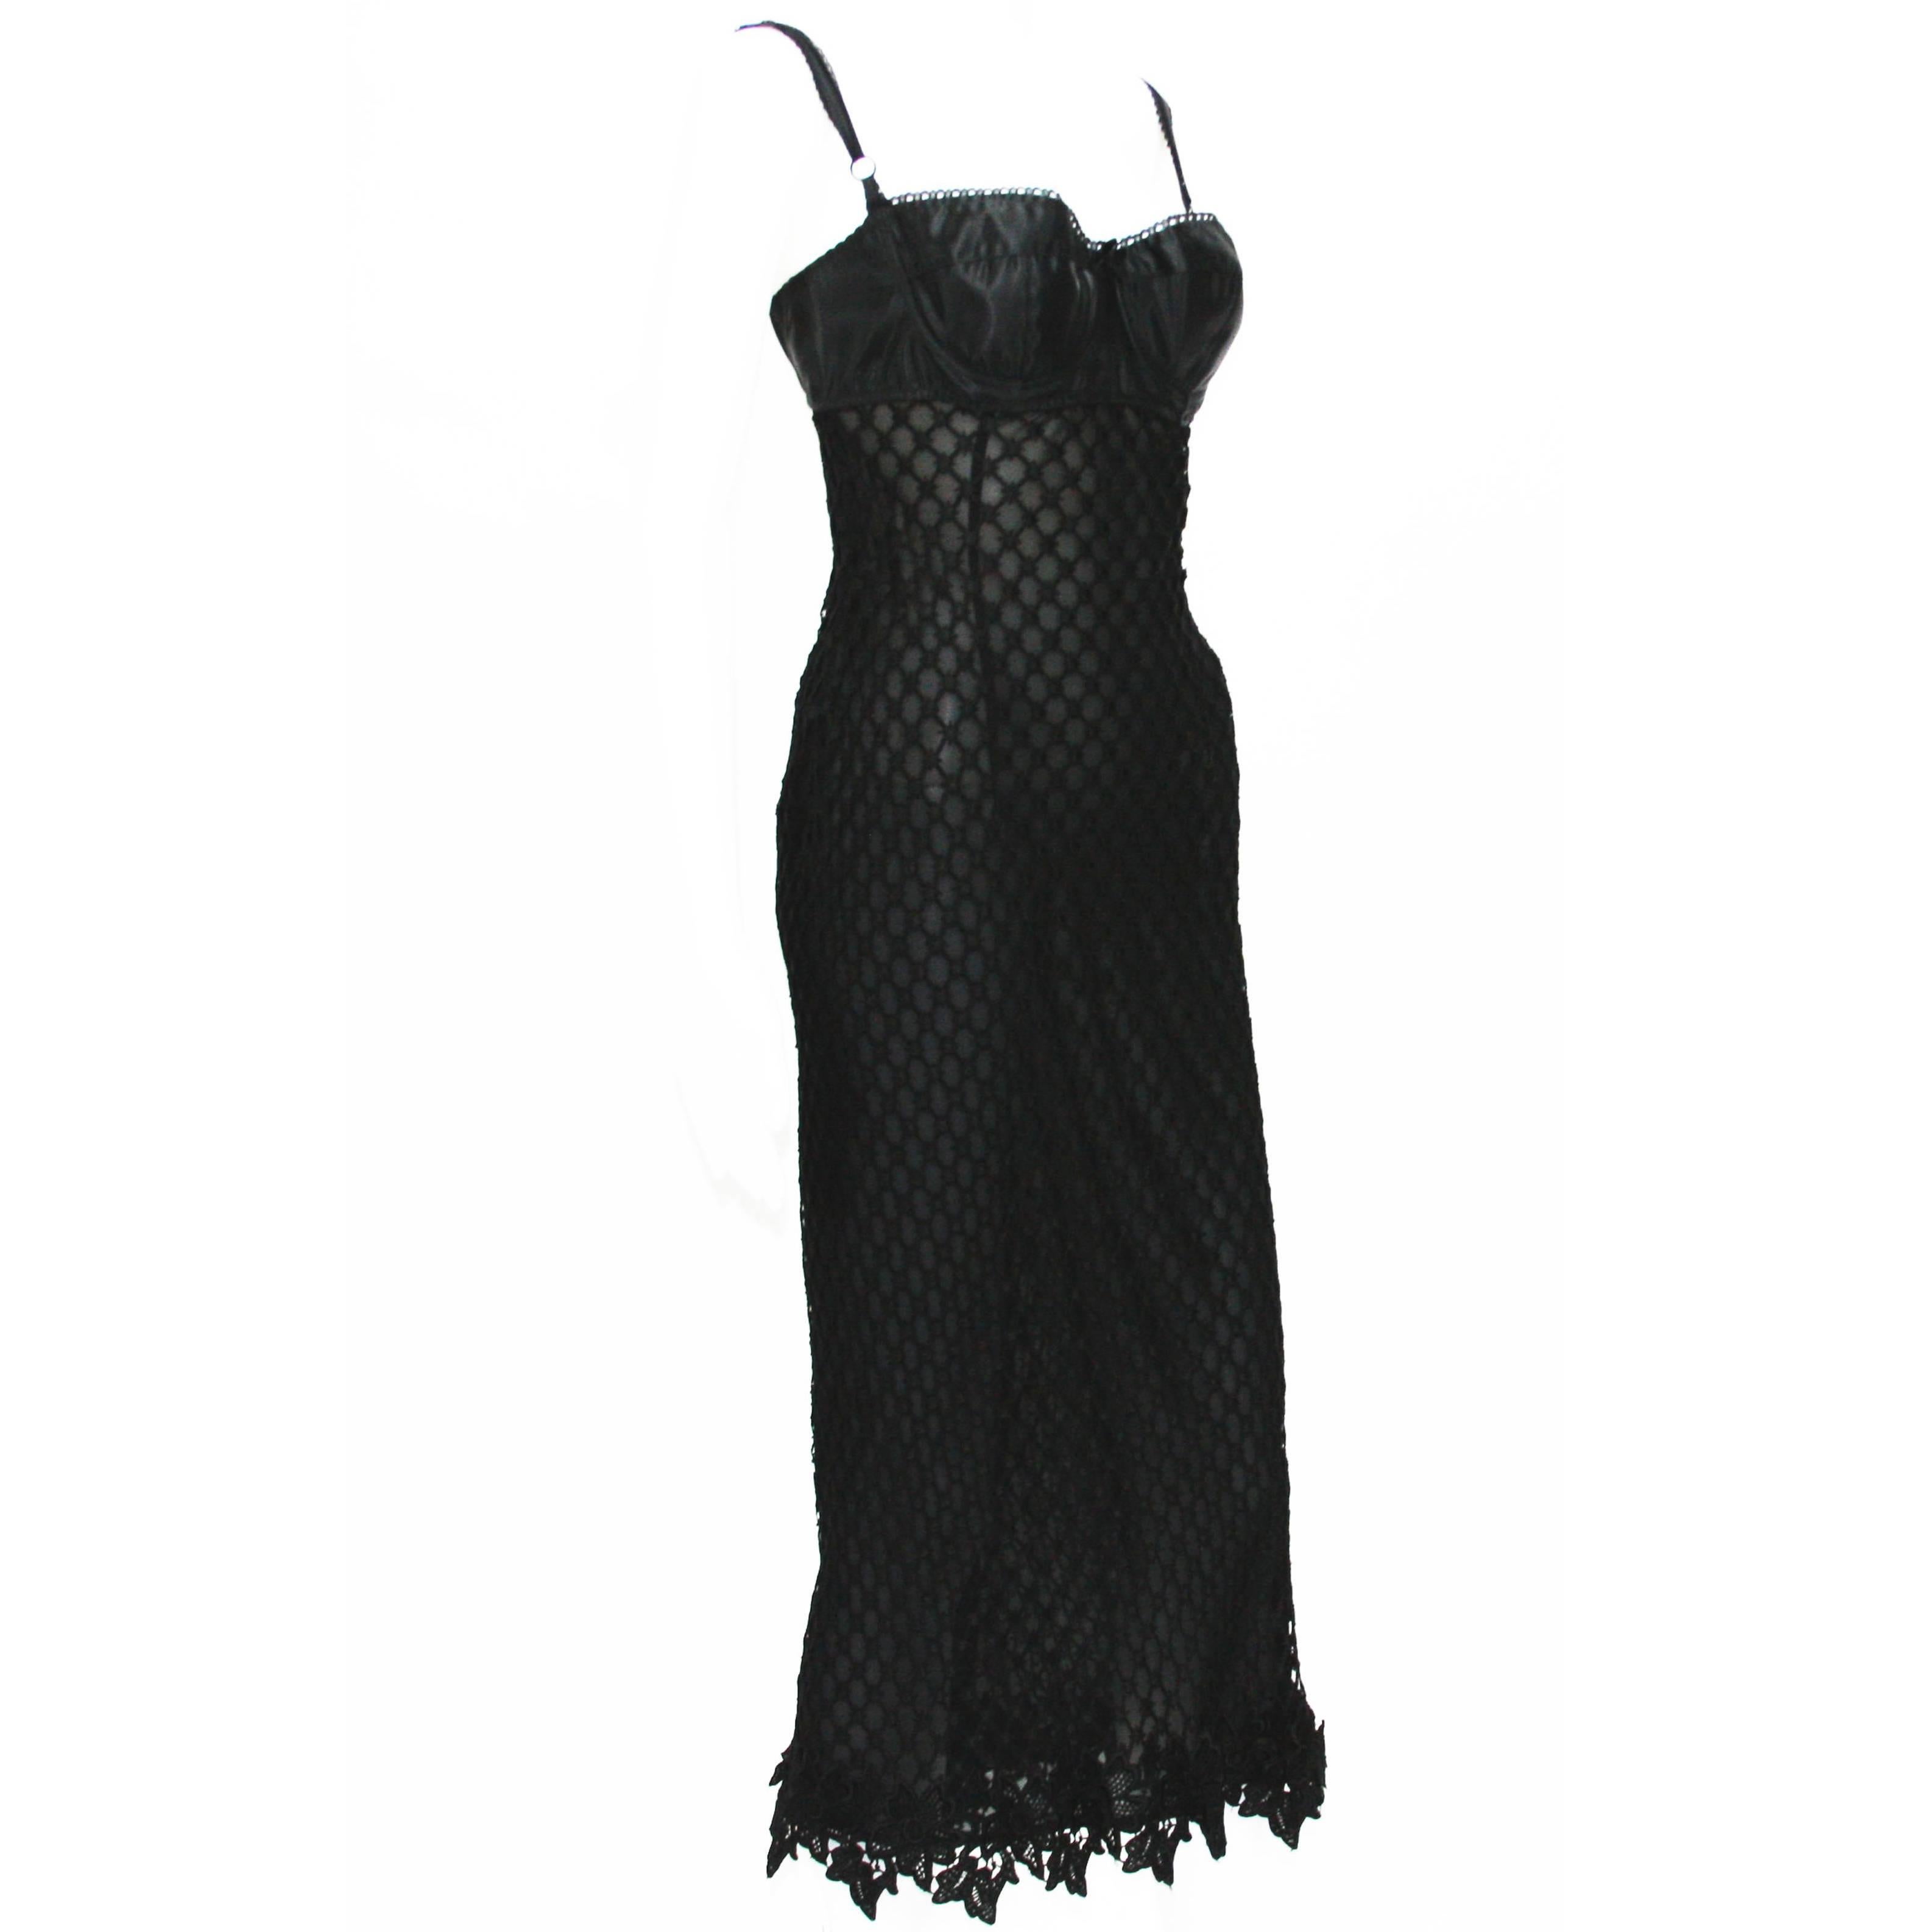 DOLCE & GABBANA Robe bustier noire sexy en dentelle extensible et transparente 44 en vente